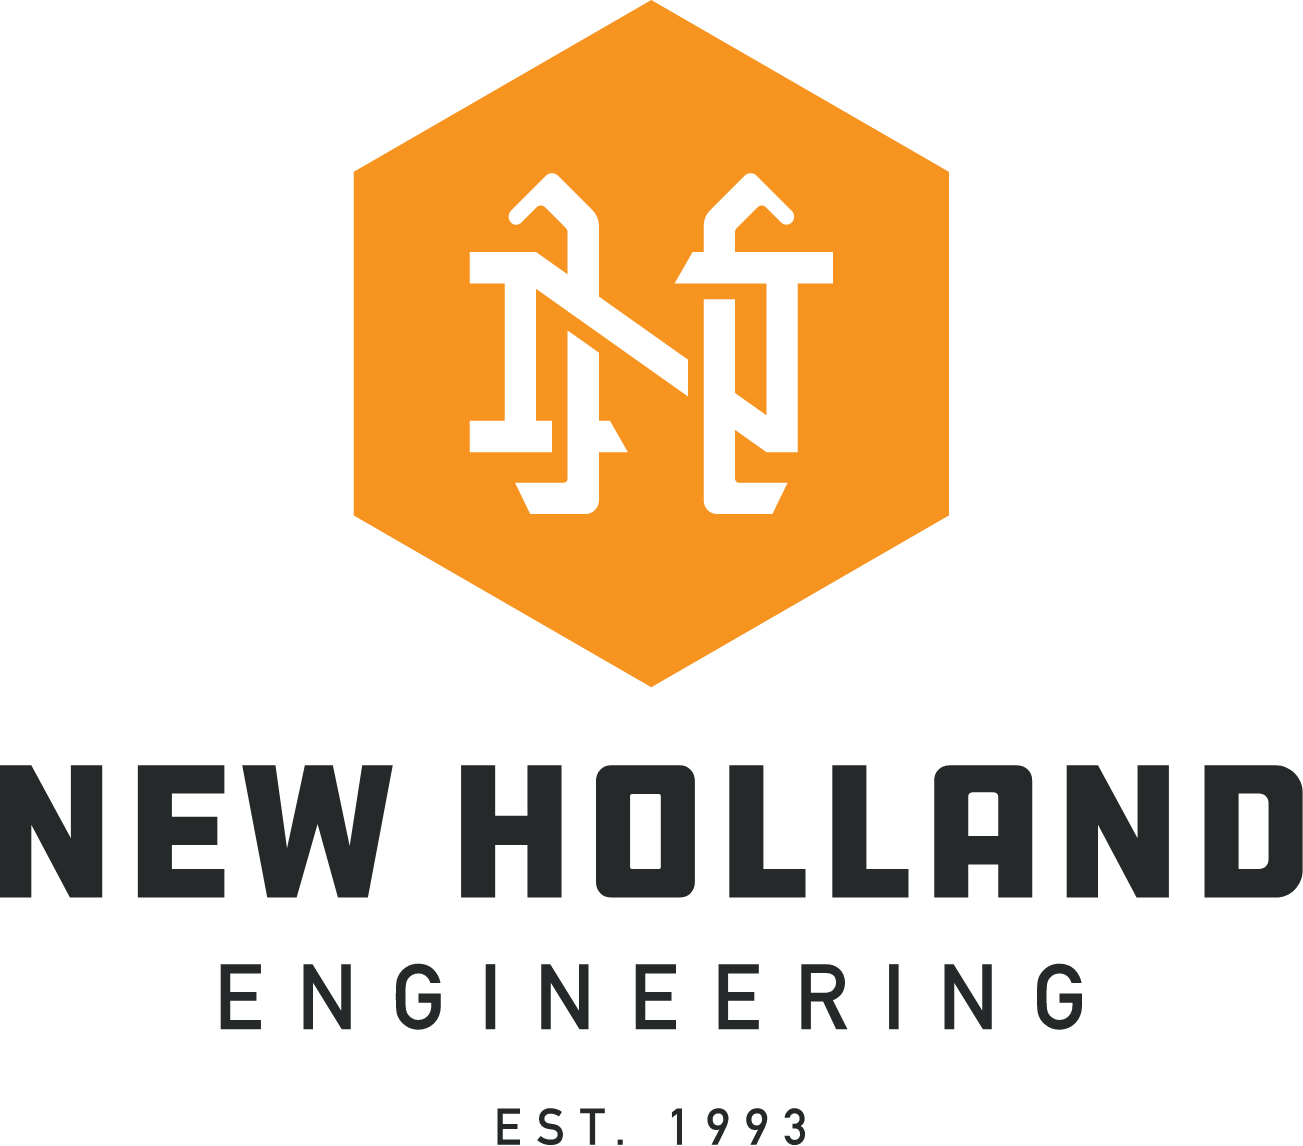 New Holland Engineering